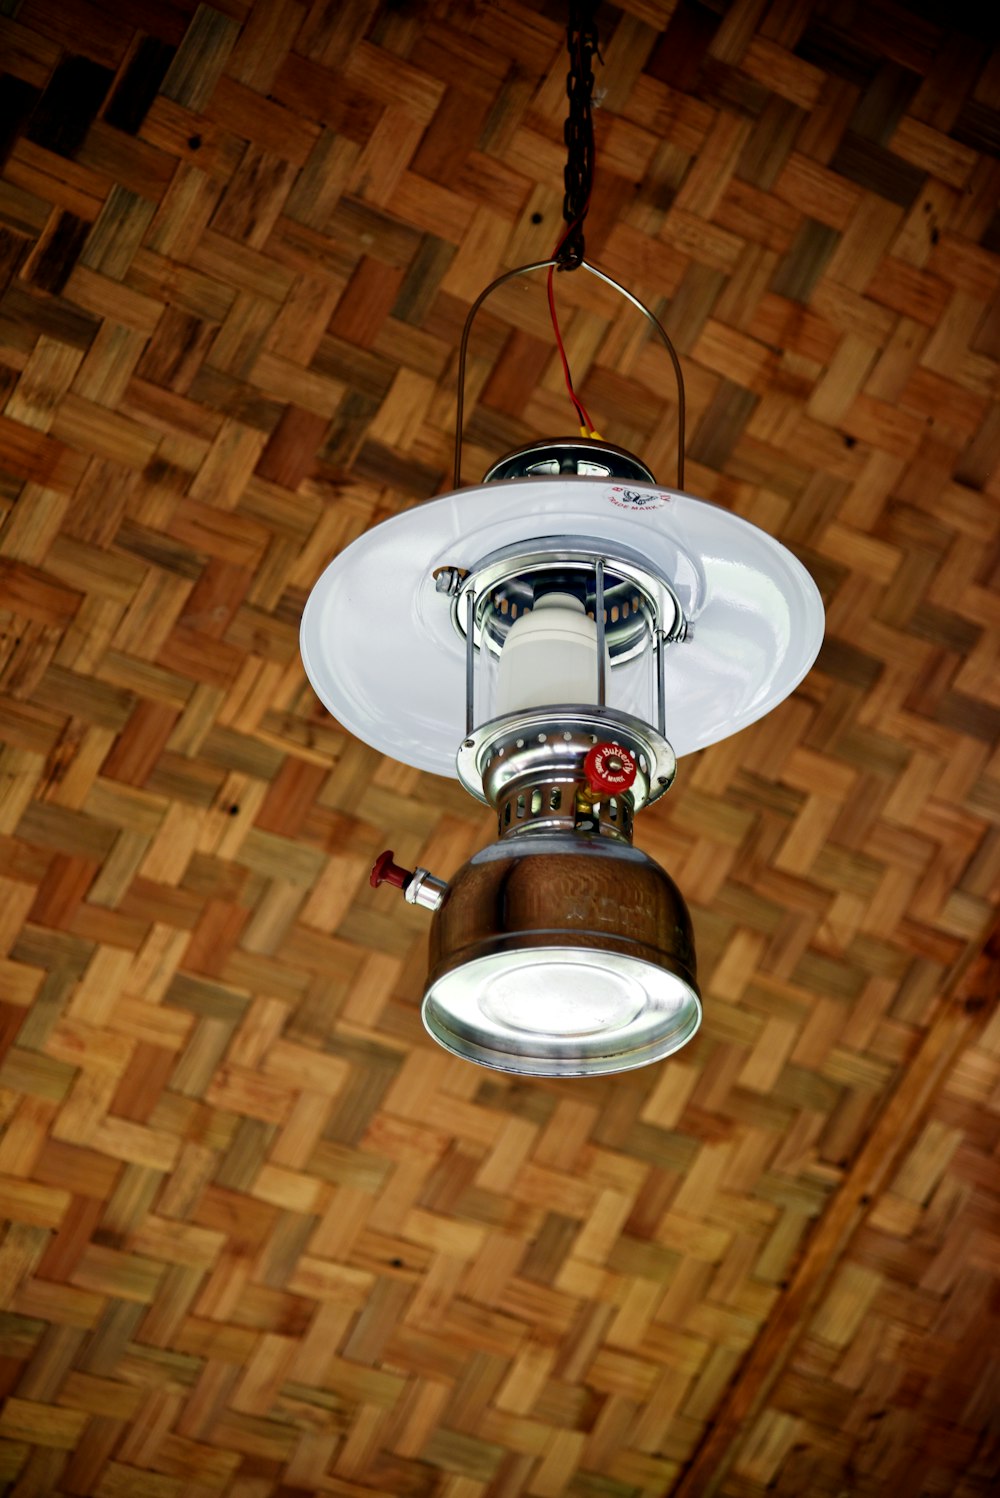 an overhead view of a light fixture on a wood floor